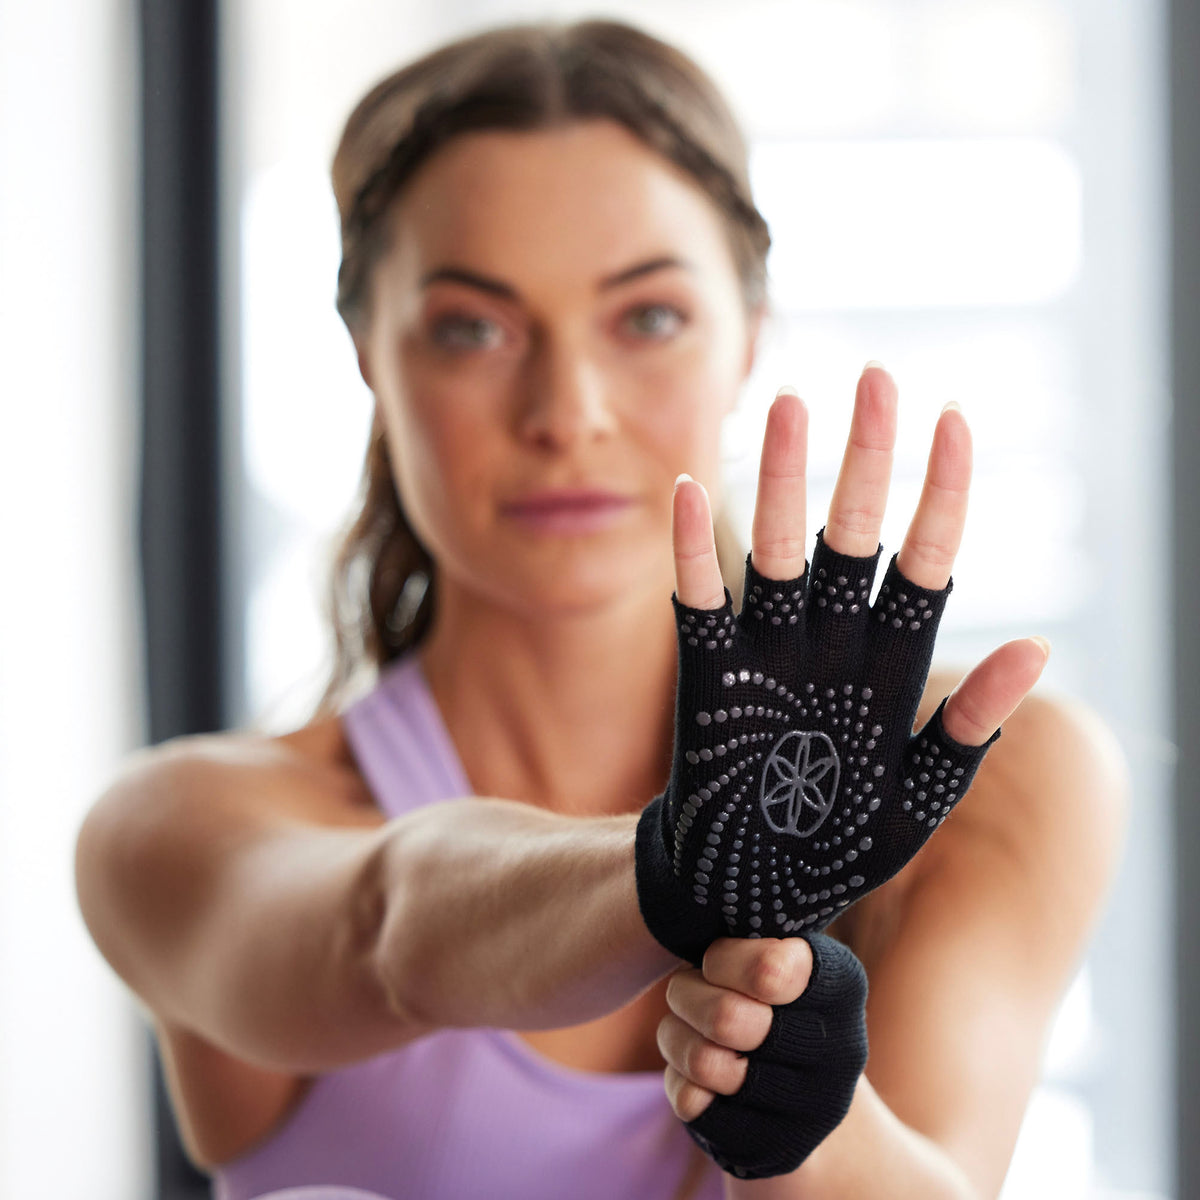 Gaiam Yoga Gloves